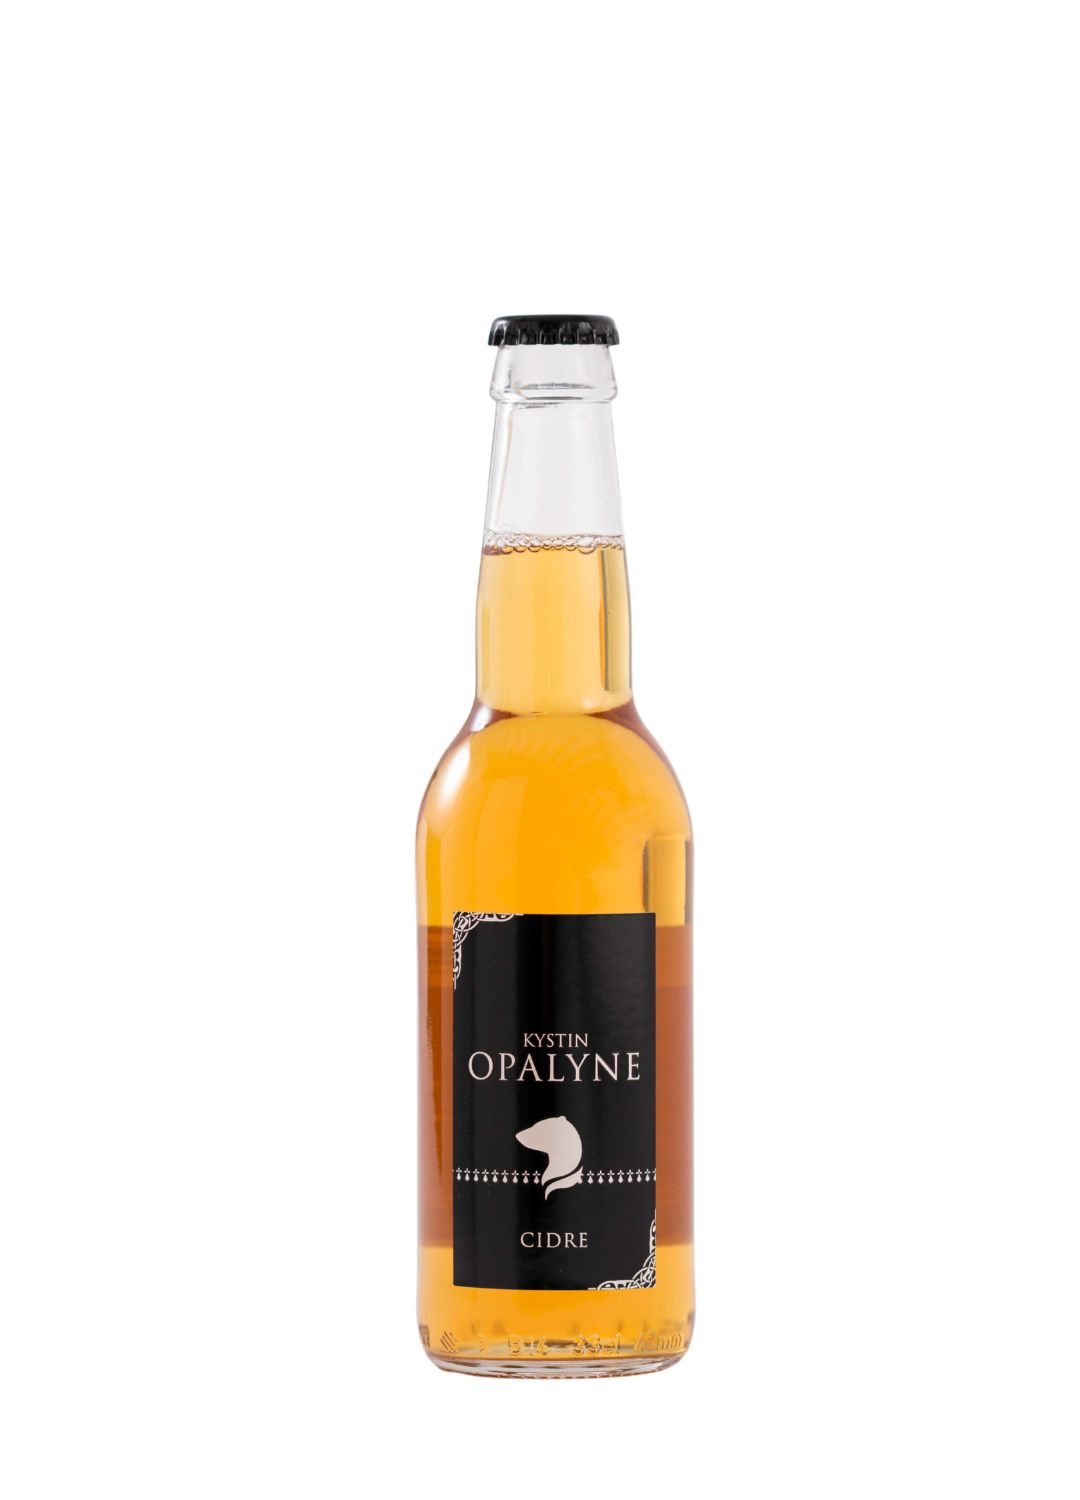 Bottle of Kystin Opalyne Brut Cider 330ml from French Cider & Spirits